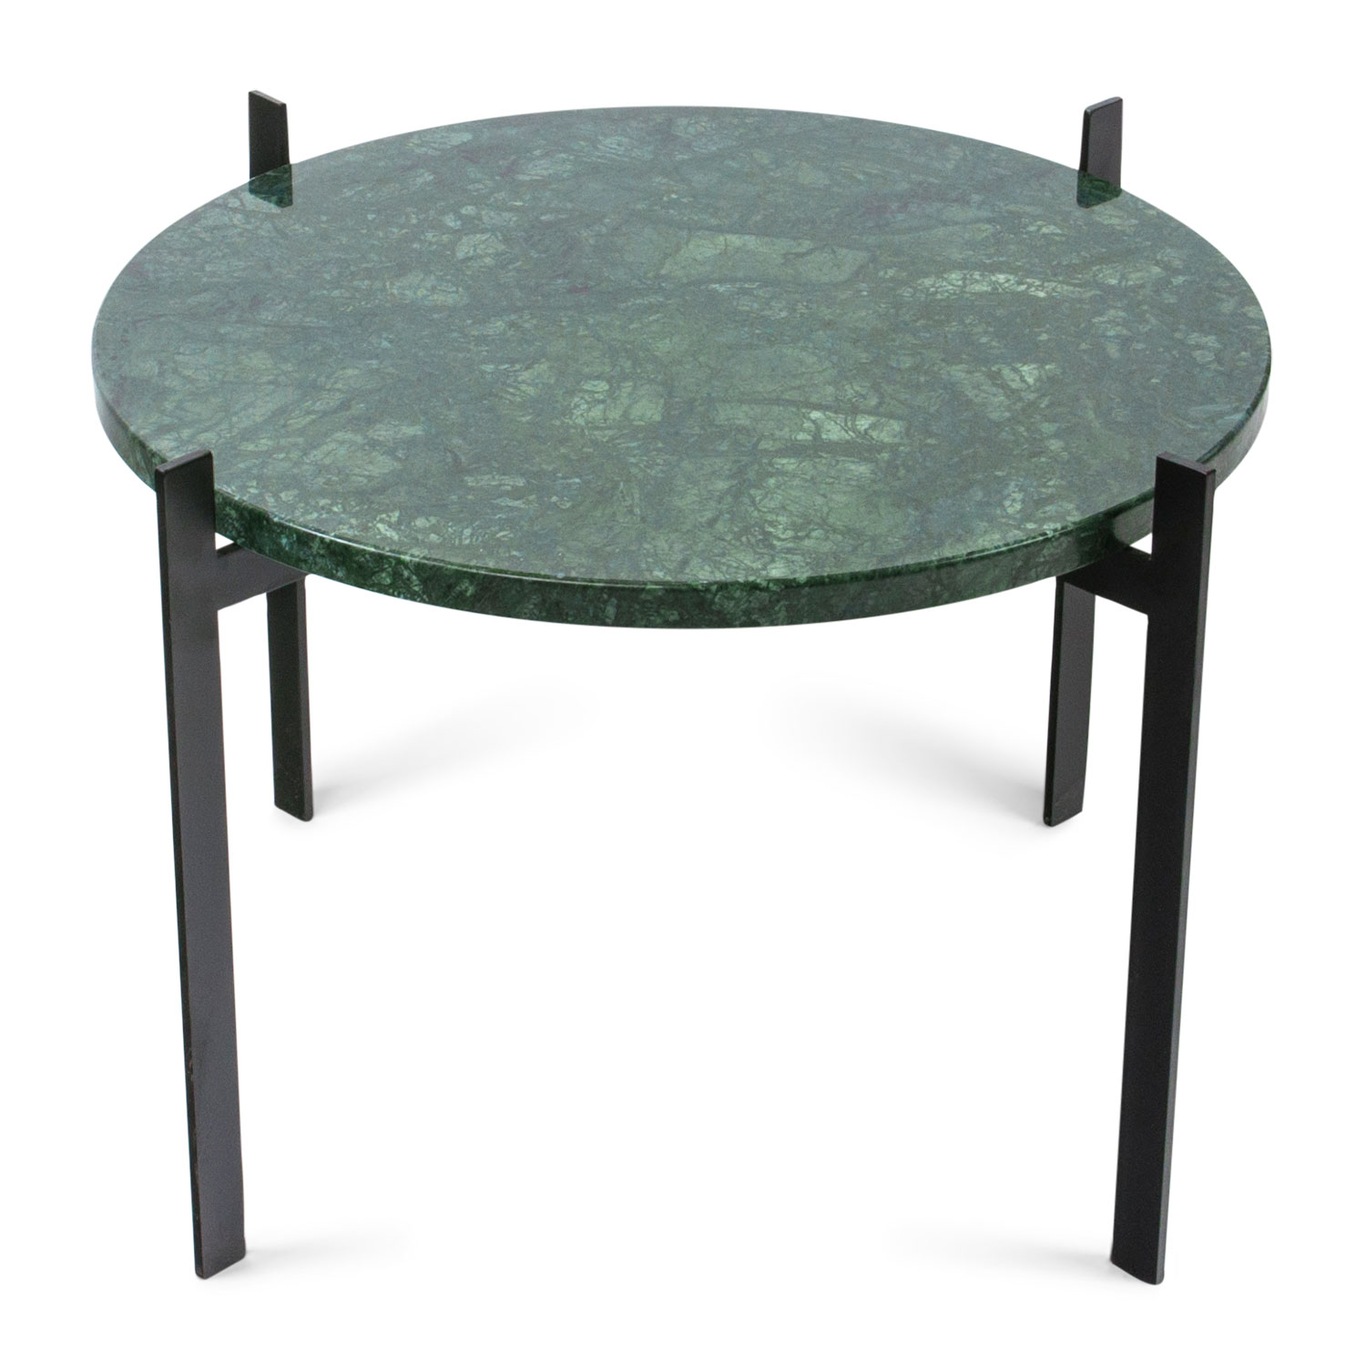 Single Deck Table, Black Base, Green Marble